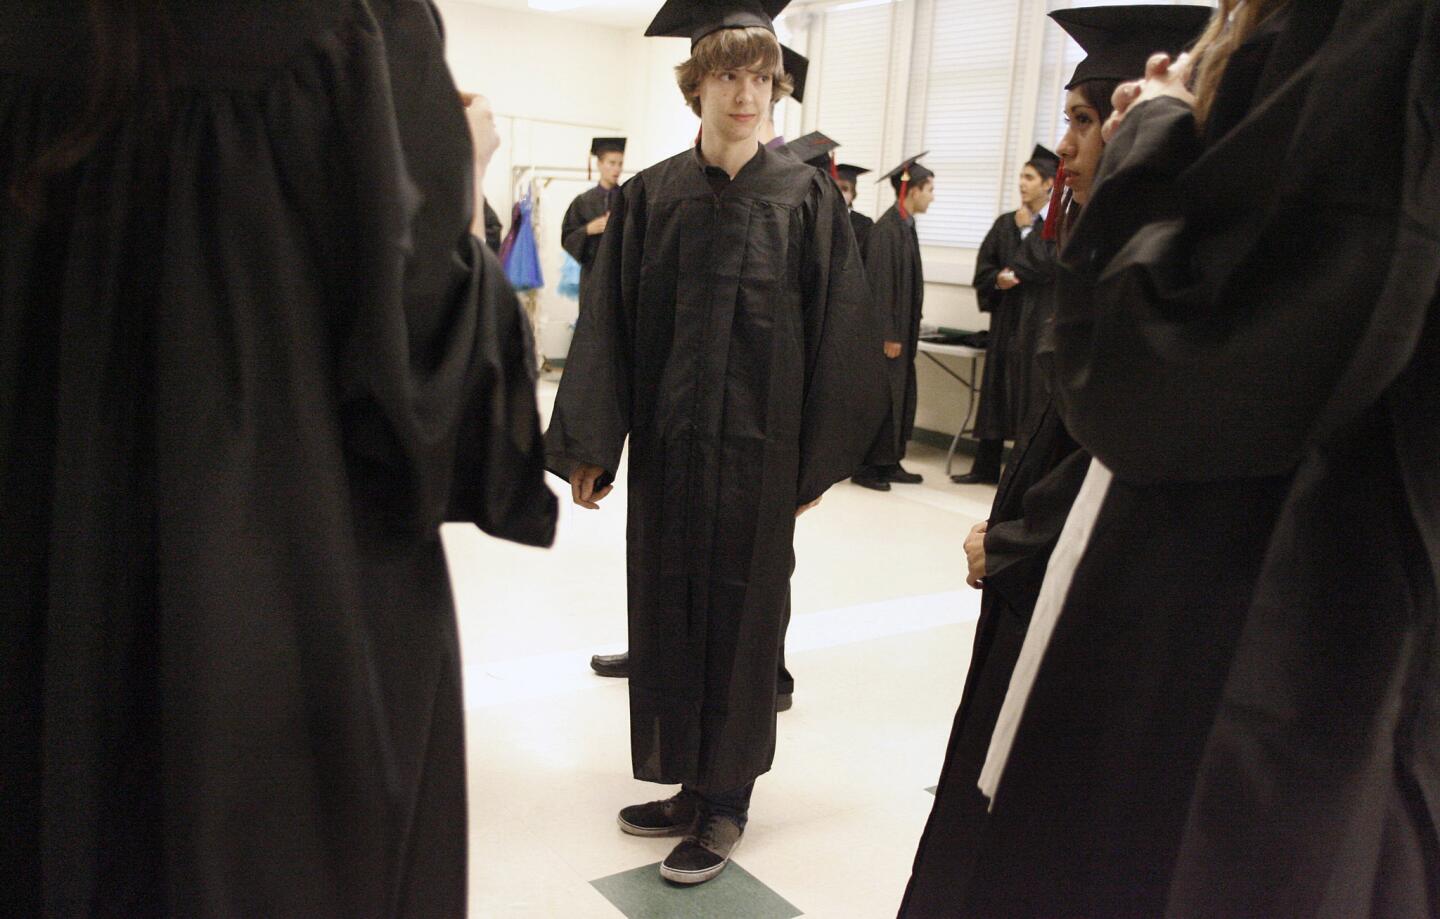 Monterey High School commencement graduation ceremony